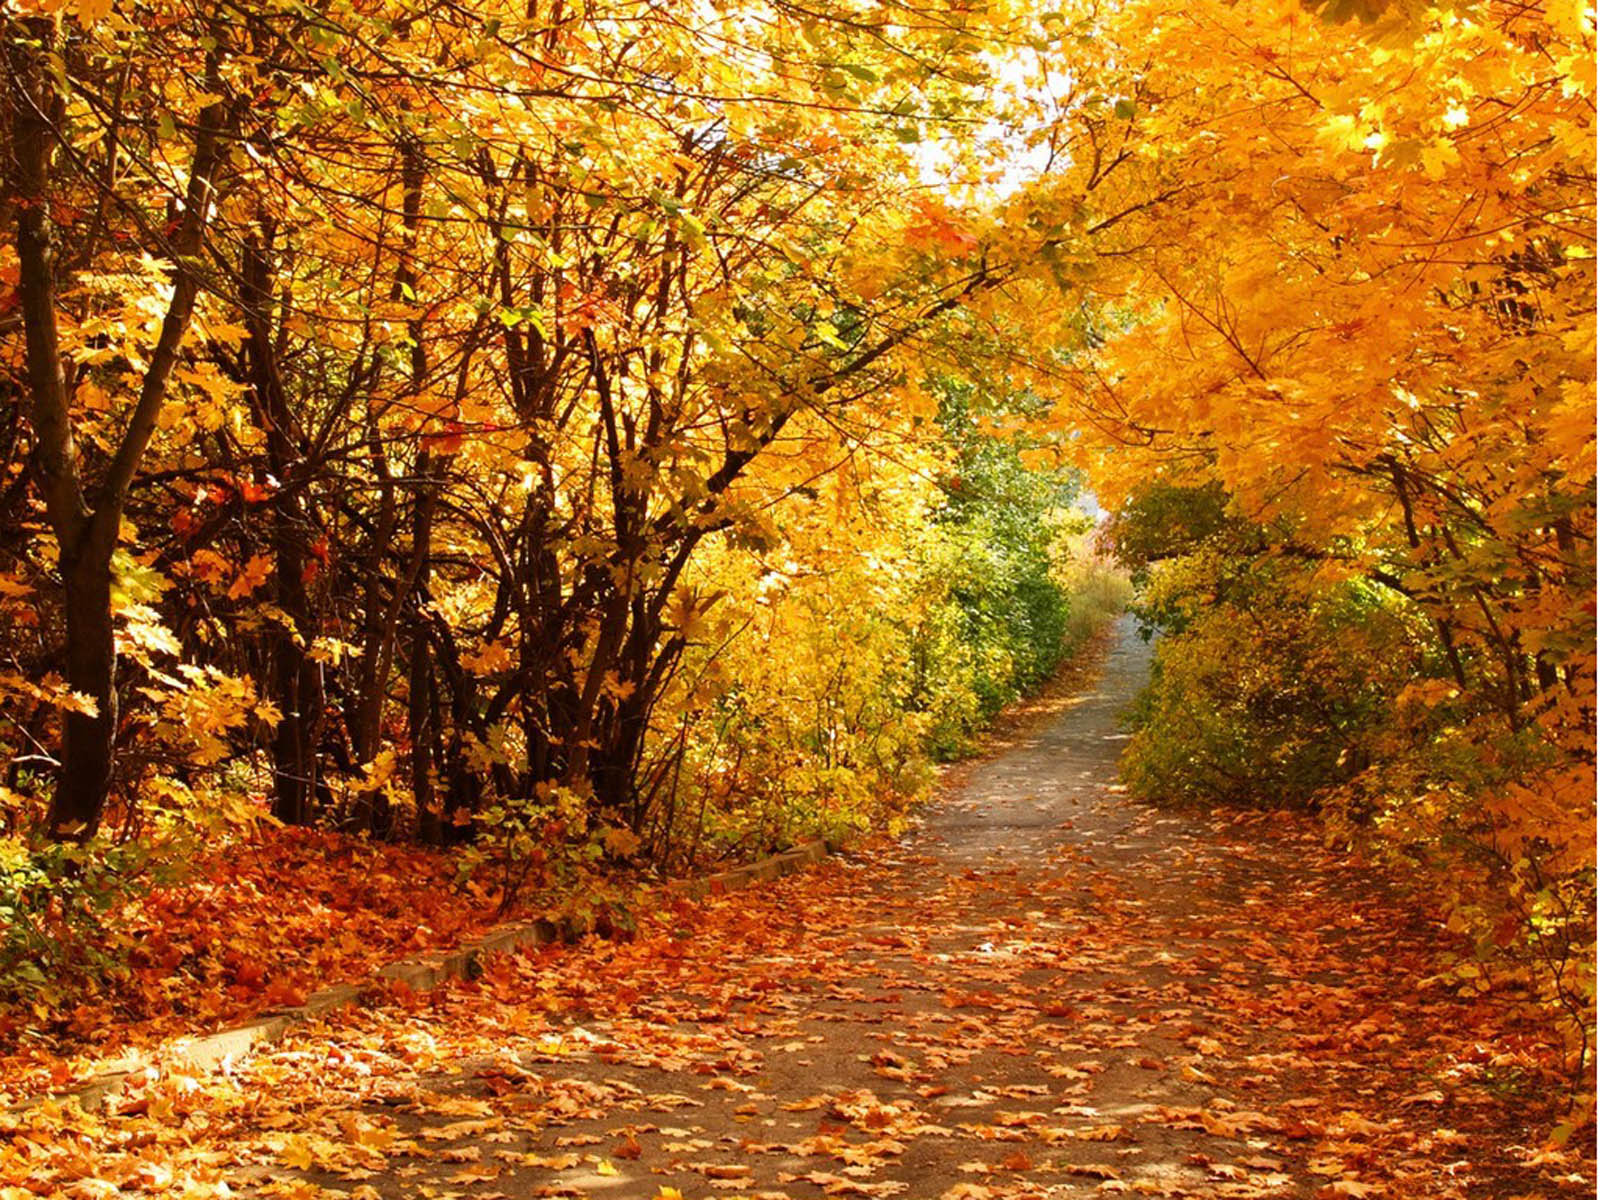 Autumn Scenery Wallpapers BeautifulAutumn Scenery Desktop Wallpapers